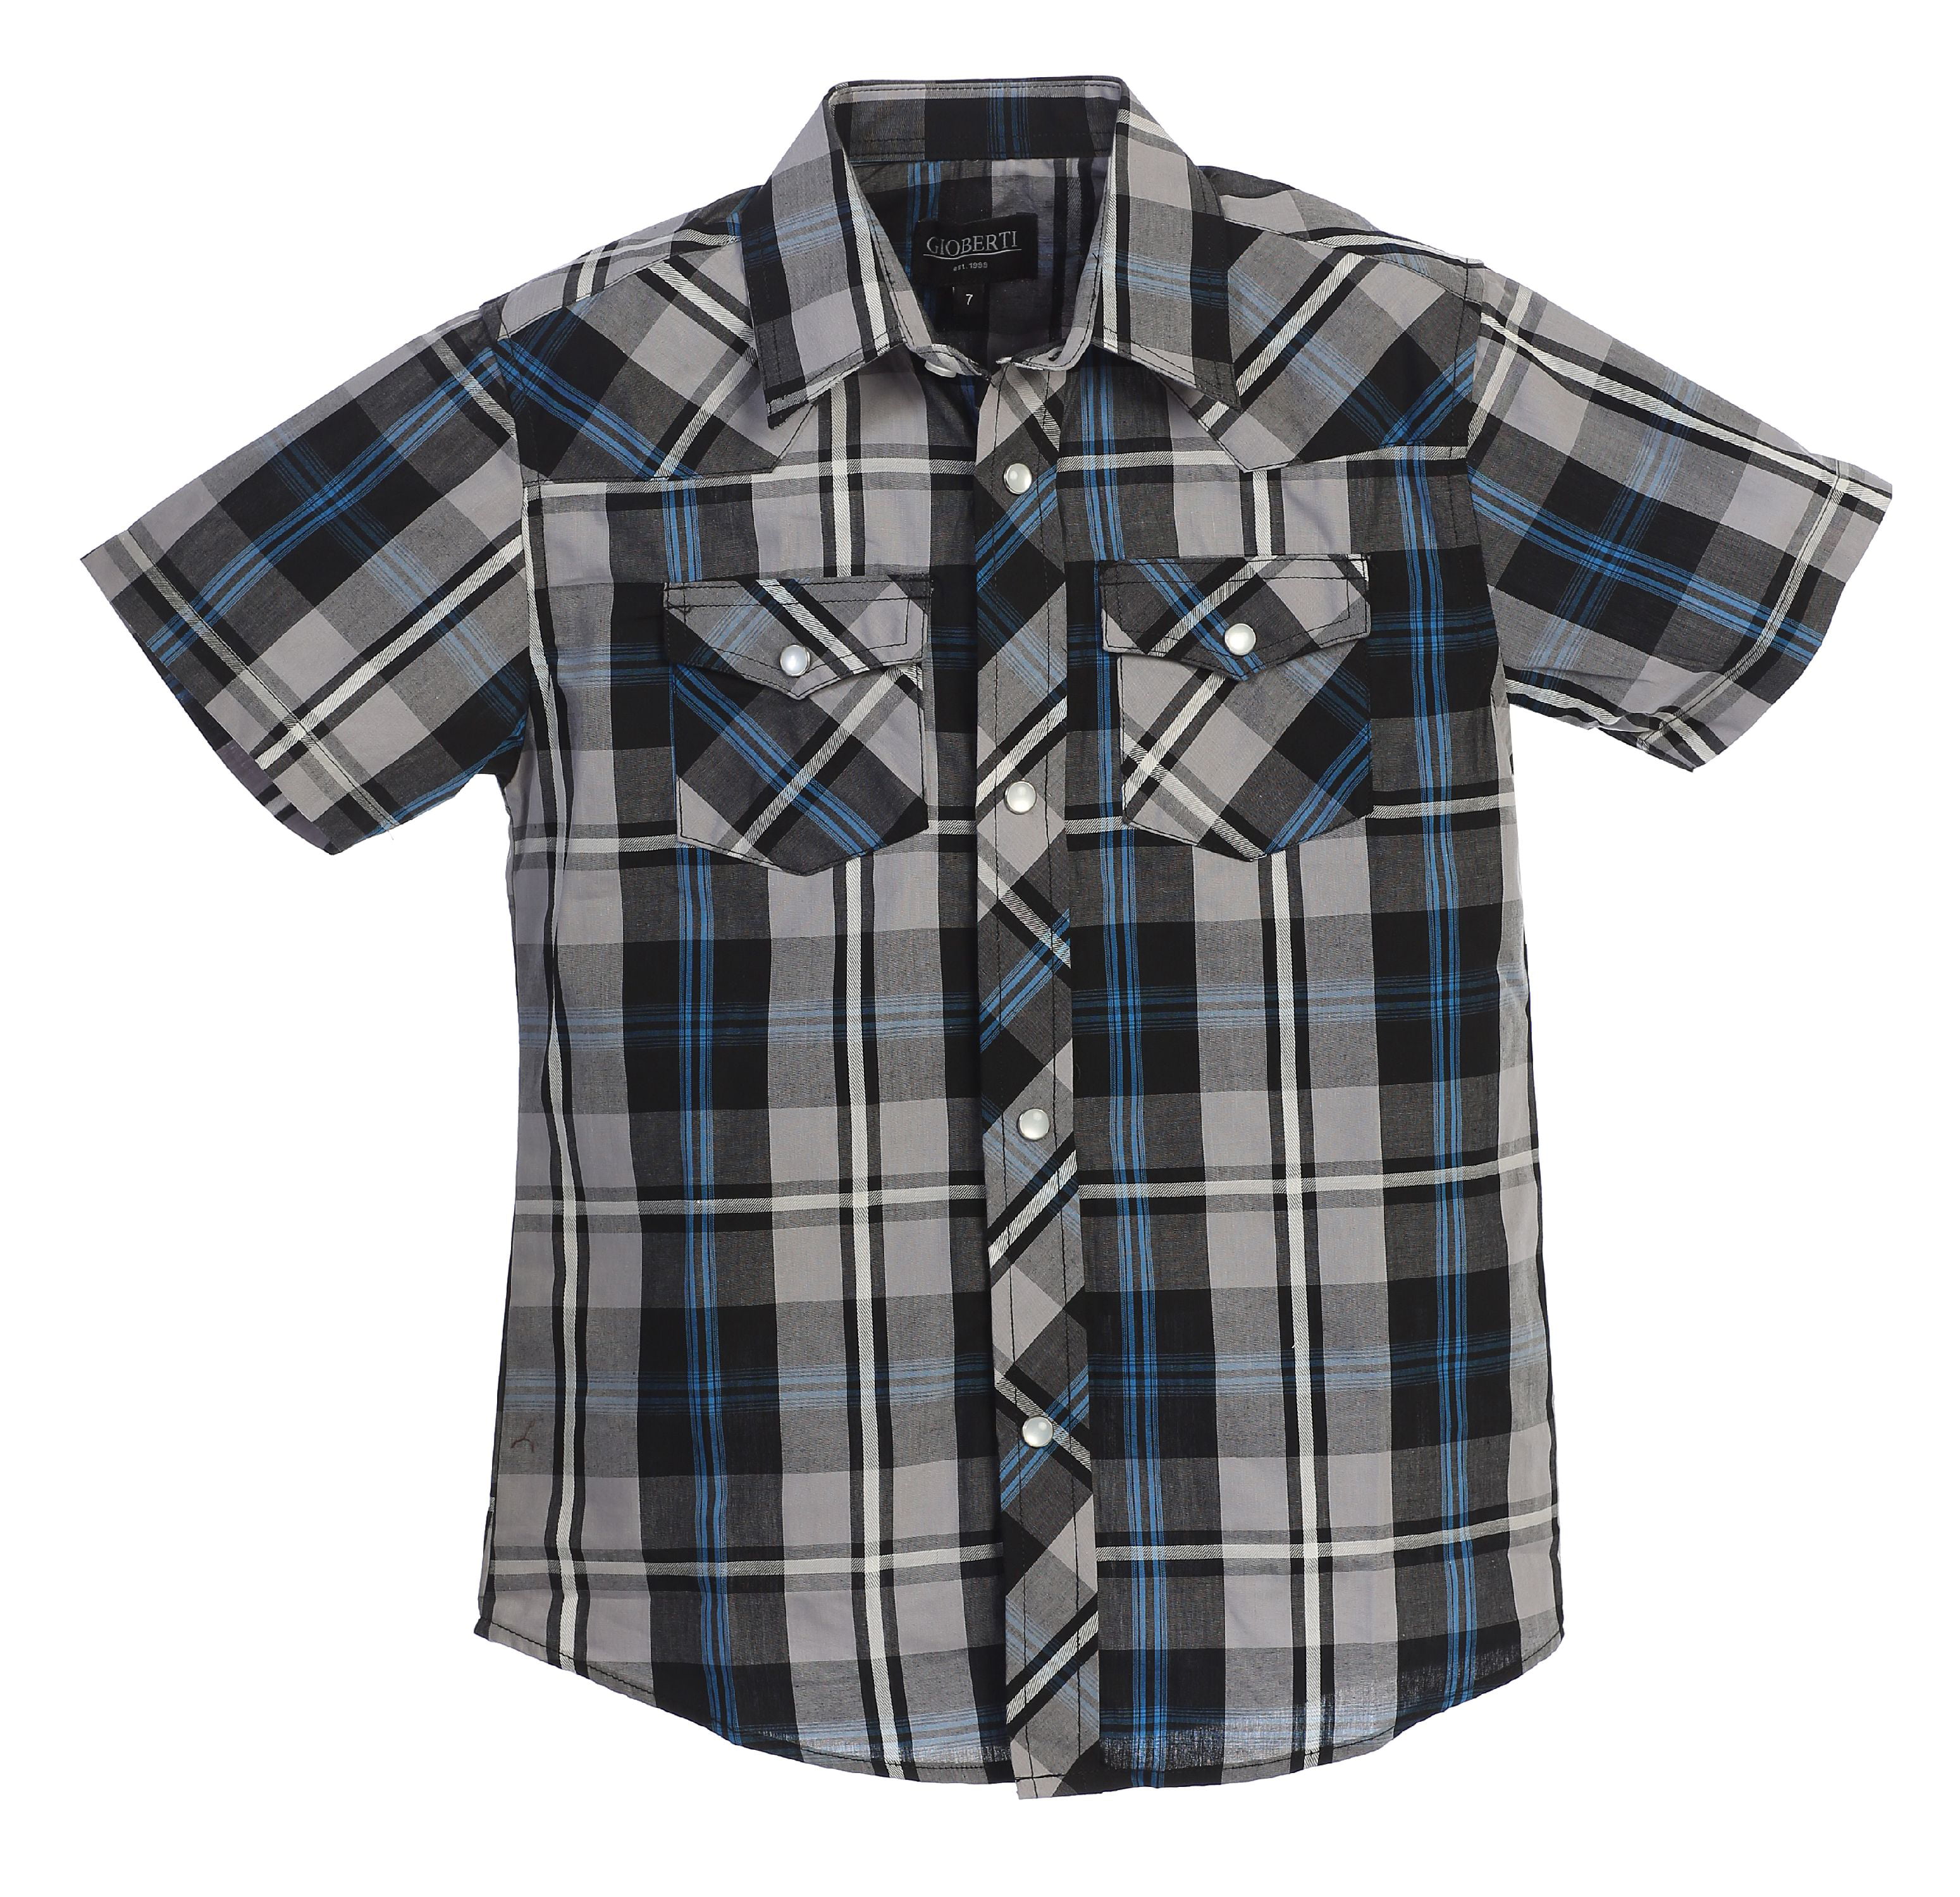 Gioberti Boys Casual Western Plaid Pearl Snap-on Buttons Short Sleeve Shirt 